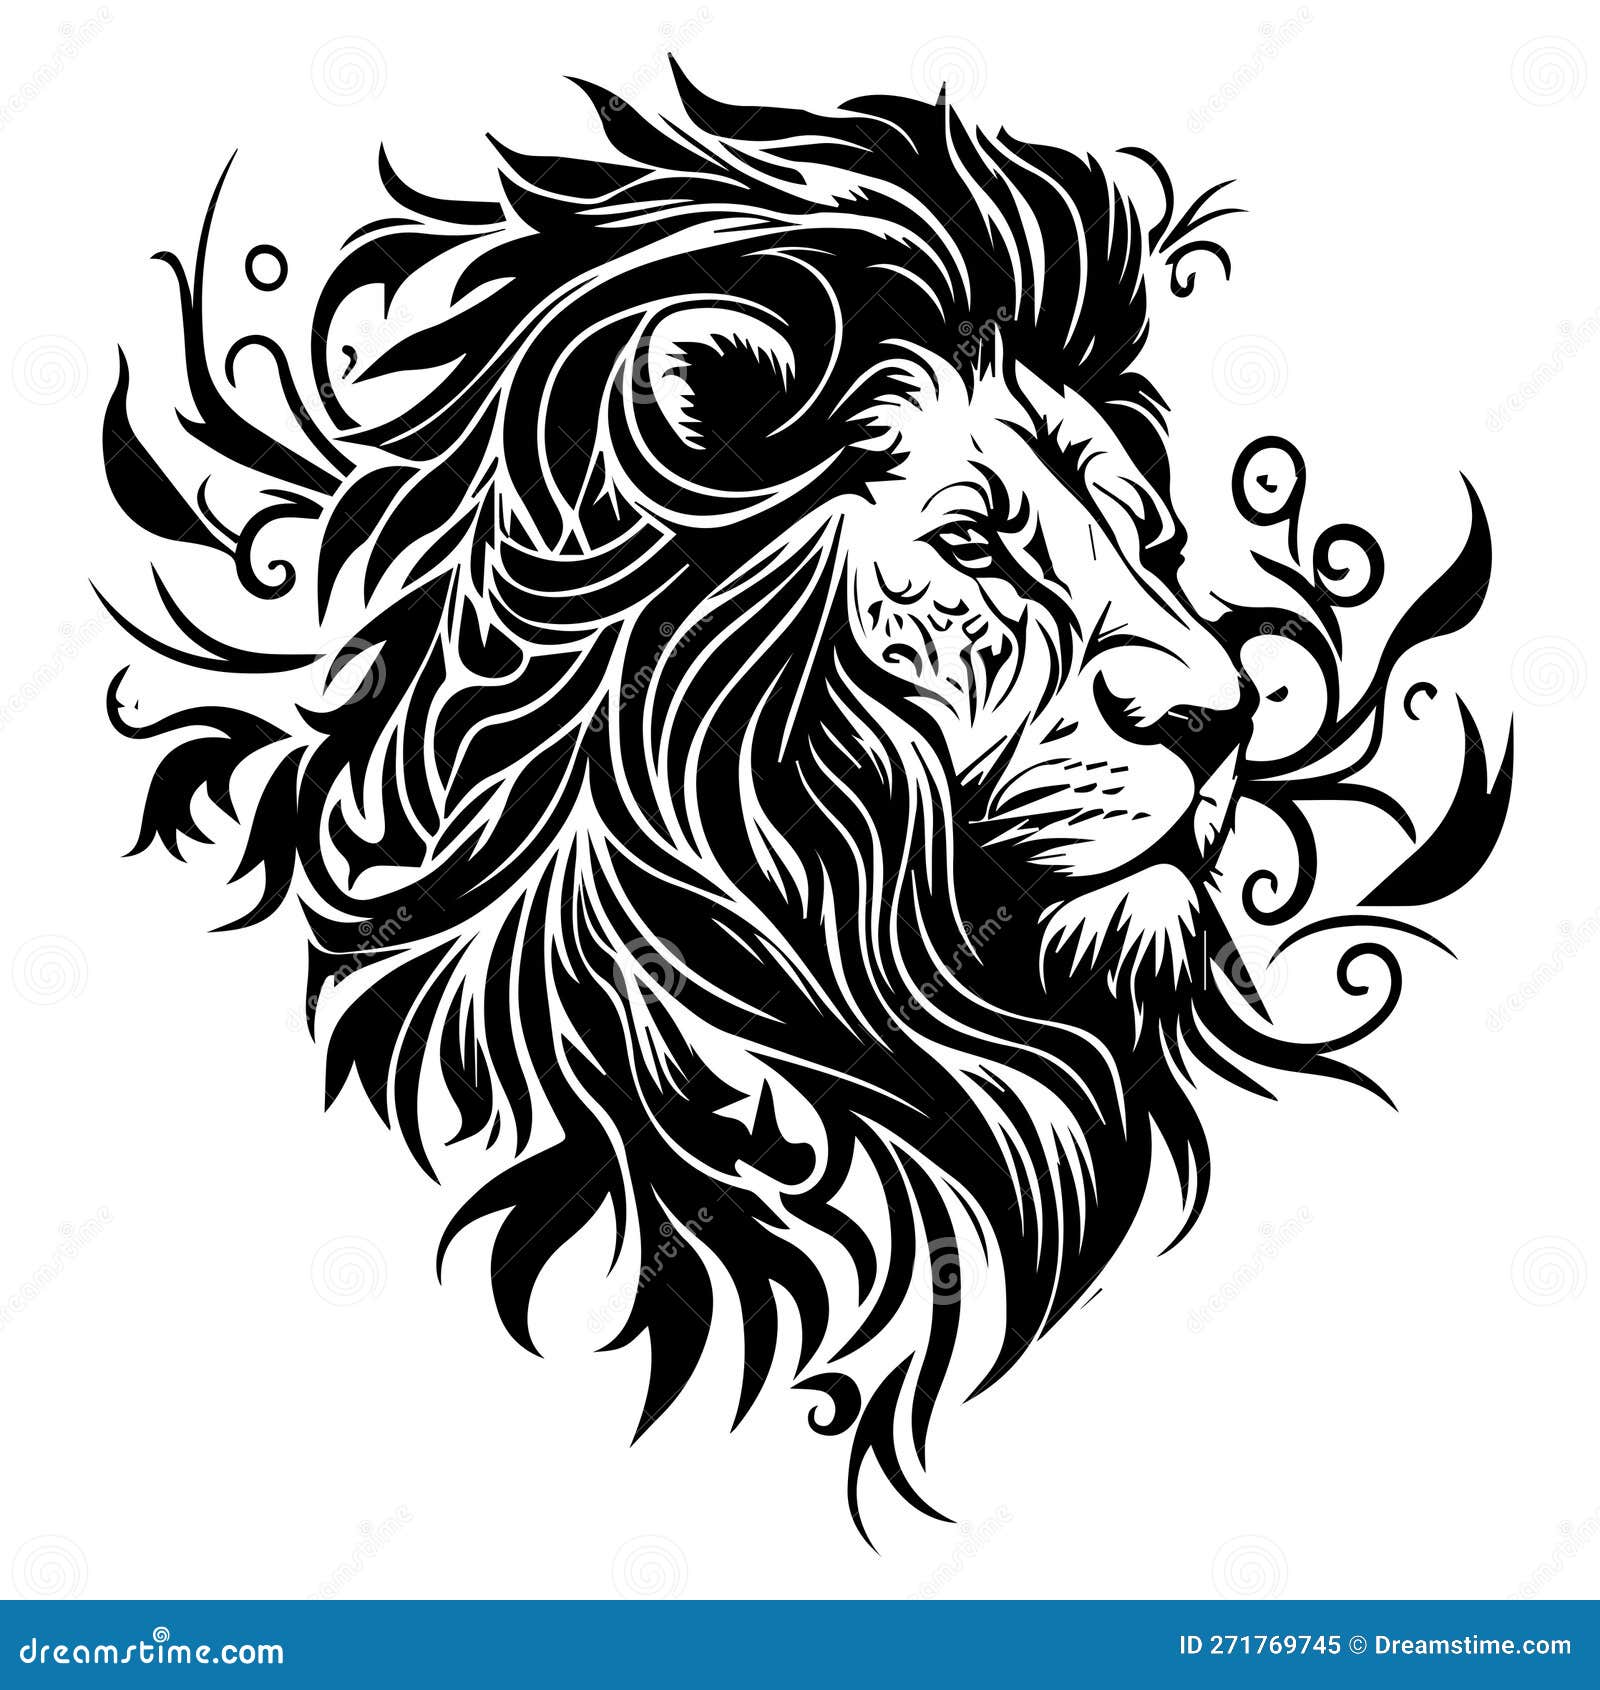 Amazon.com: LA DECAL Tribal Lion Head Tattoo art Nice Silhouette #2 laptop  car truck 6